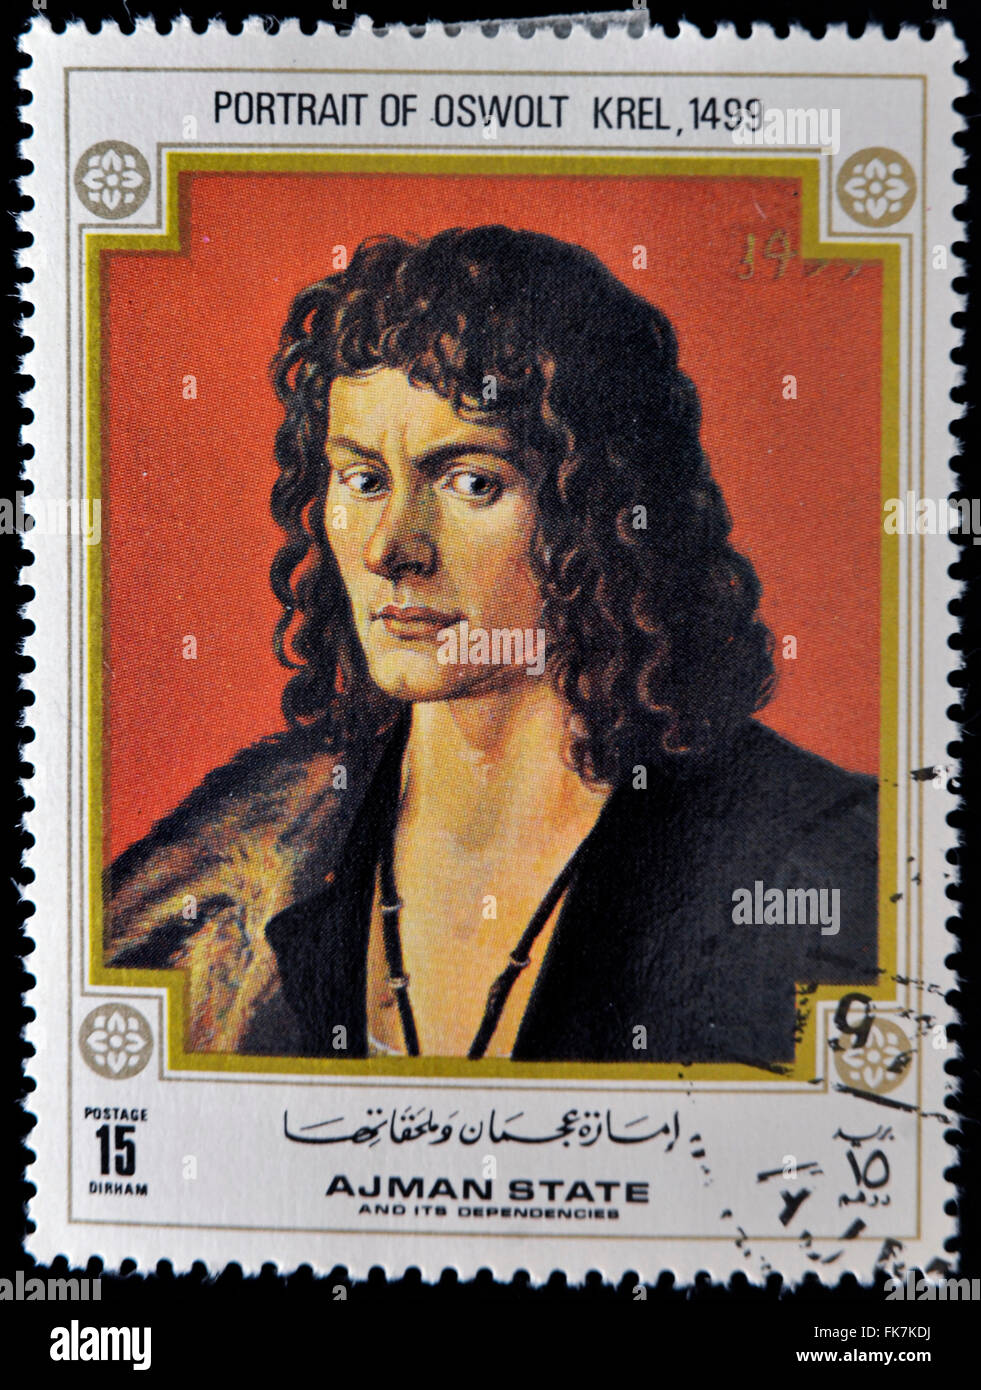 AJMAN - CIRCA 1968: A stamp printed in Ajman shows painting of Albrecht Durer - Portrait of Oswolt Krel, circa 1968 Stock Photo